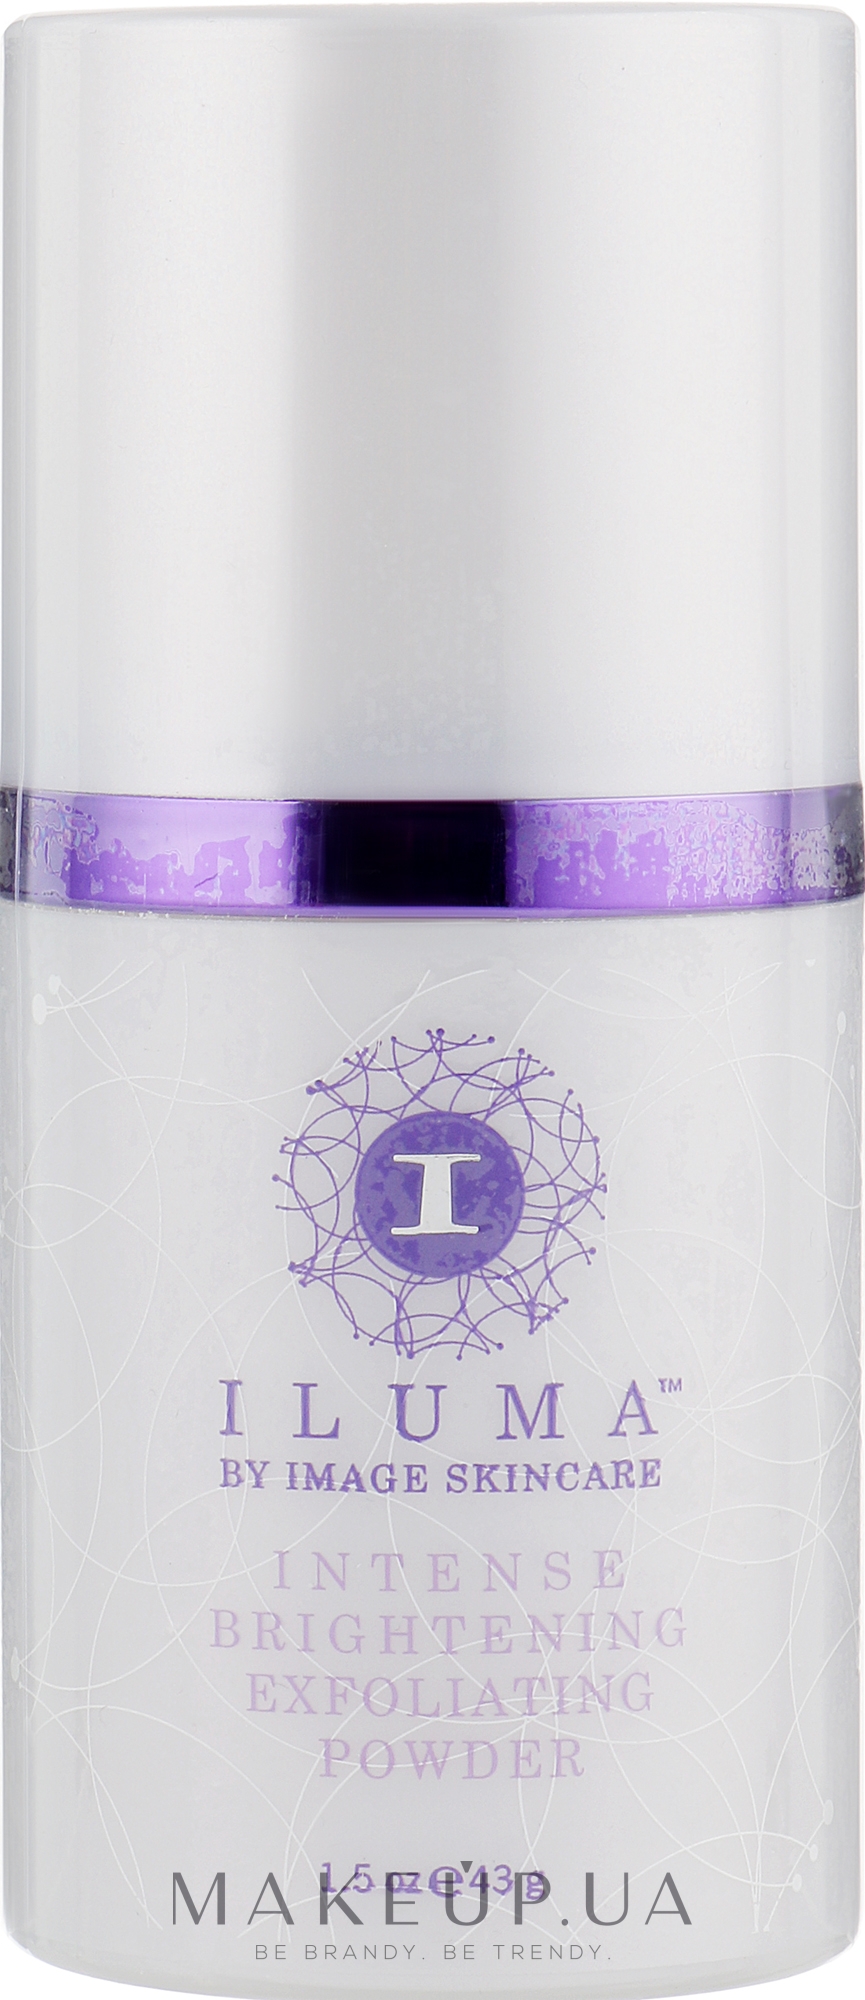 Осветляющая пудра-эксфолиант - Image Skincare Iluma Intense Brightening Exfoliating Powder — фото 43g